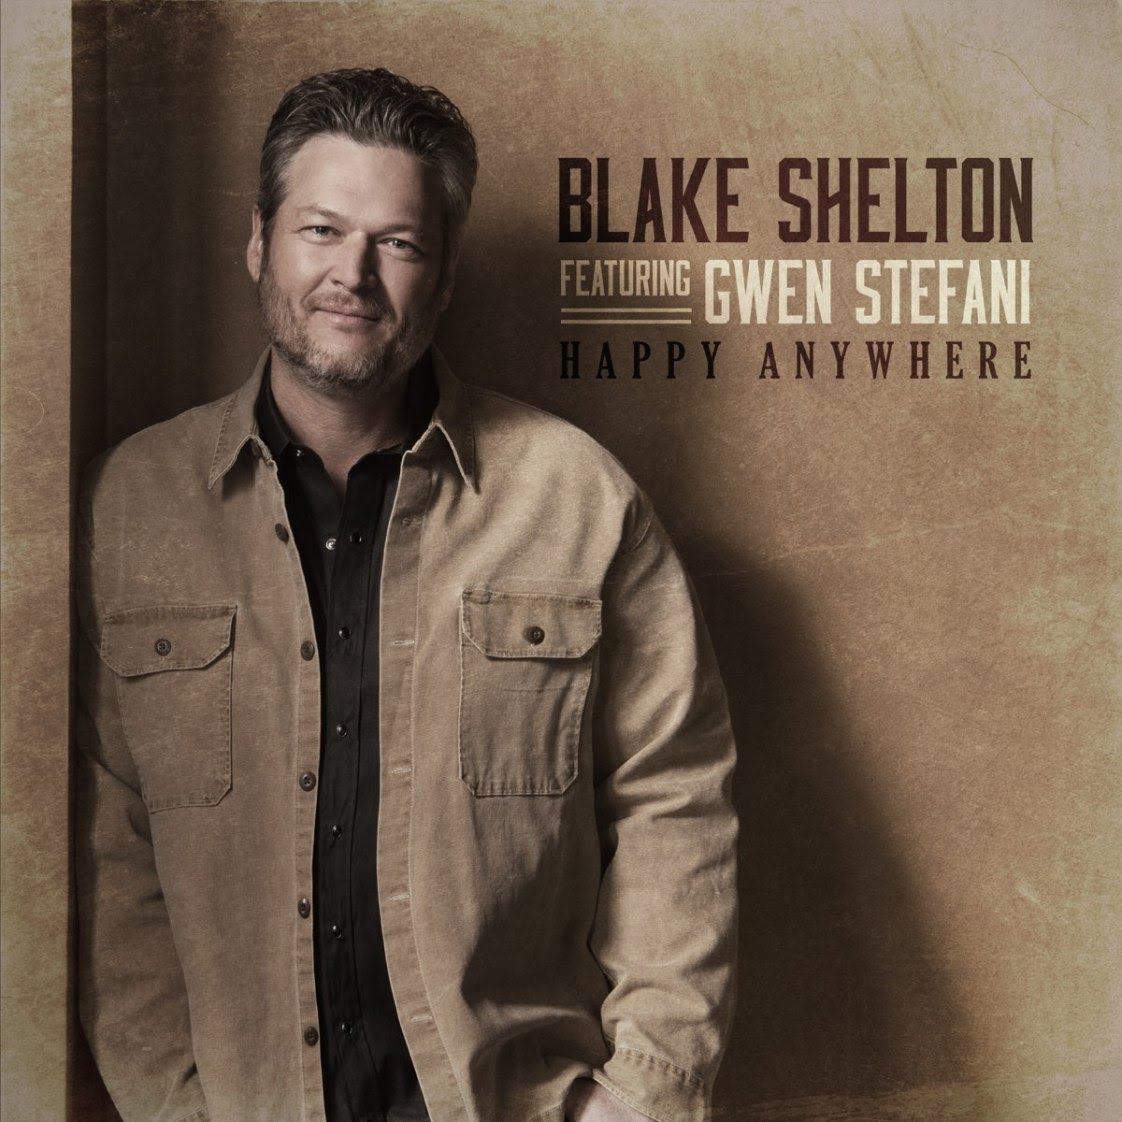 Download Blake Shelton Happy Anywhere MP3 DOWNLOAD